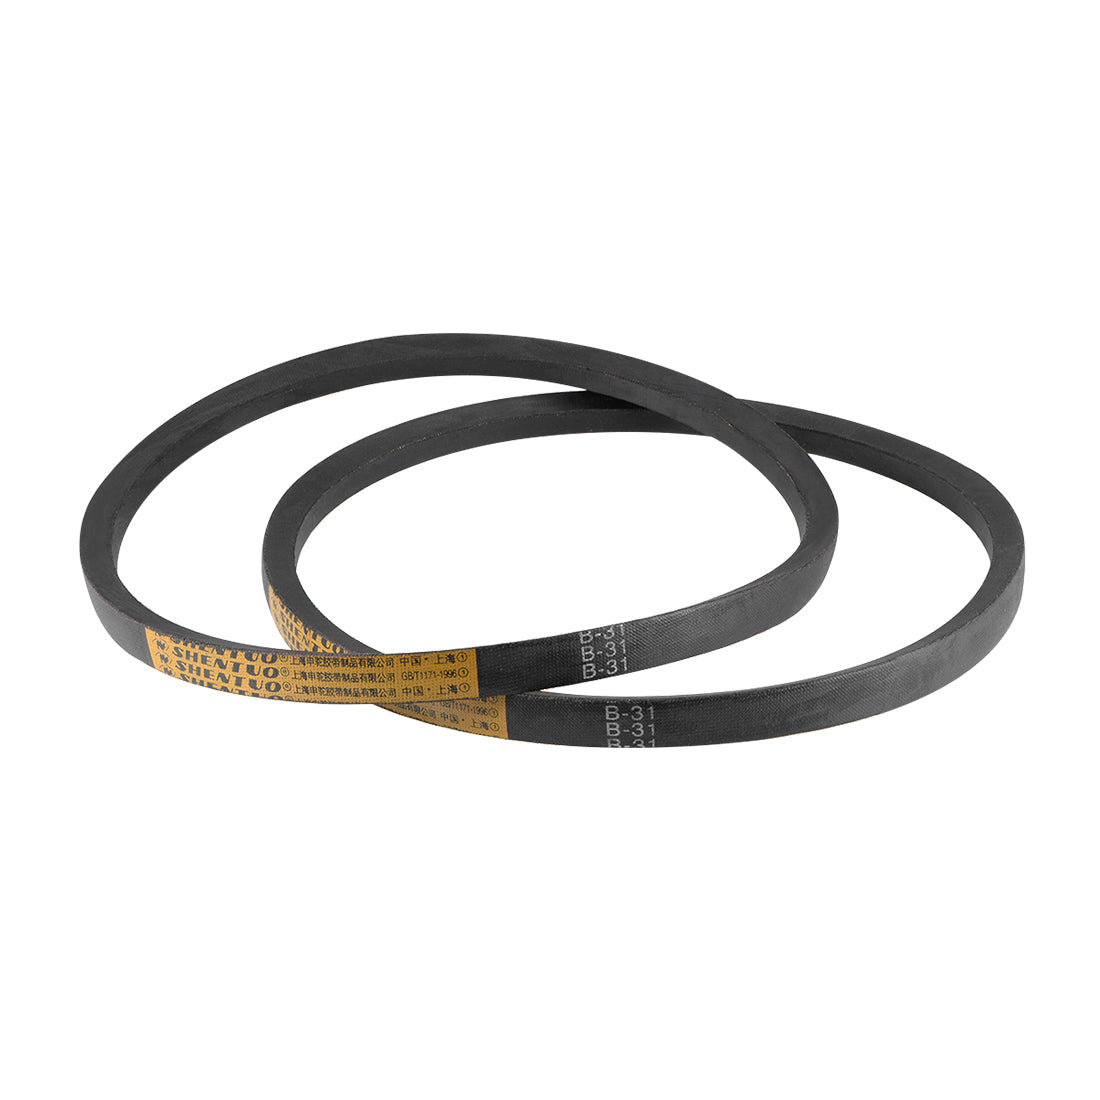 uxcell Uxcell B31 V-Belts 31" Pitch Length, B-Section Rubber Drive Belt 2pcs